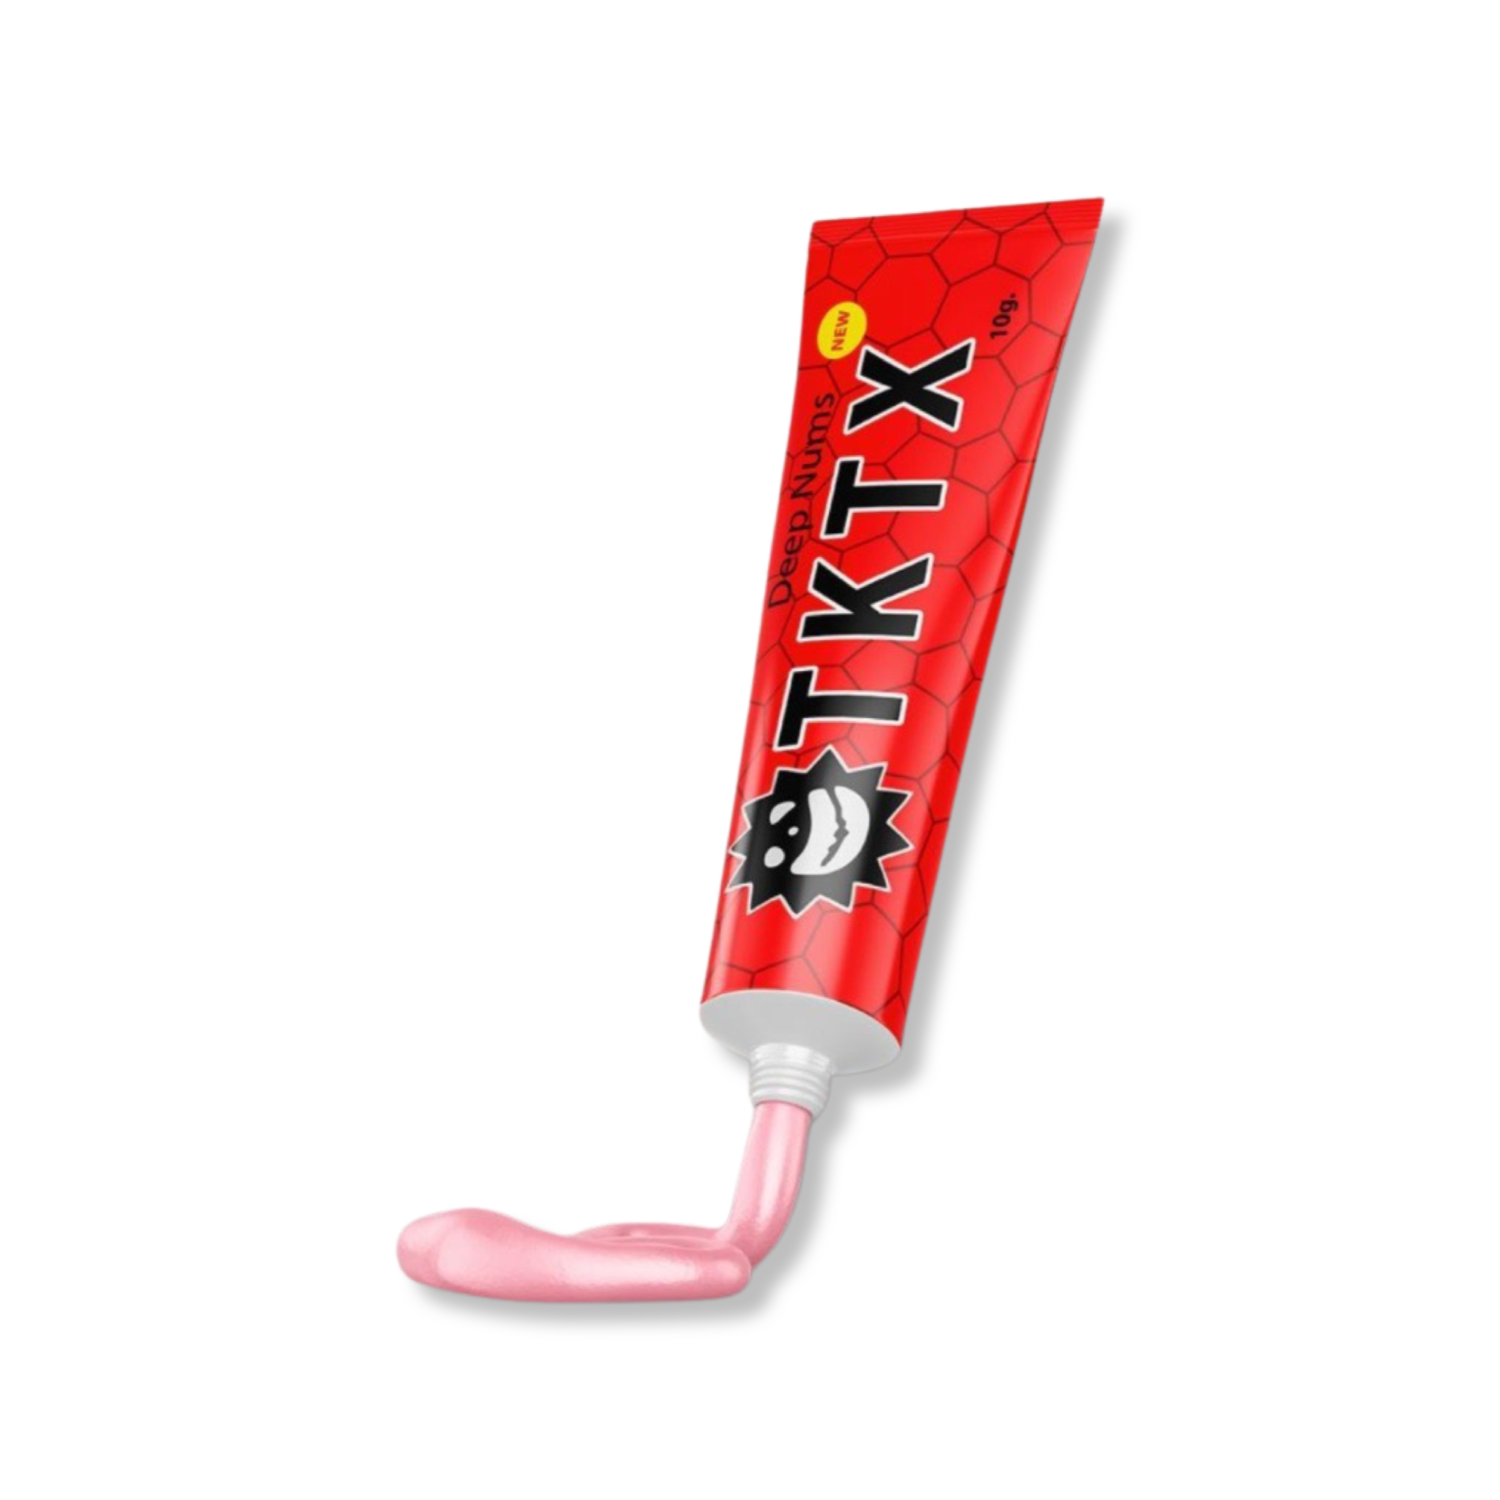 TKTX 38% Or - EXTRA FORT - Crème anesthésiante - Original officiel